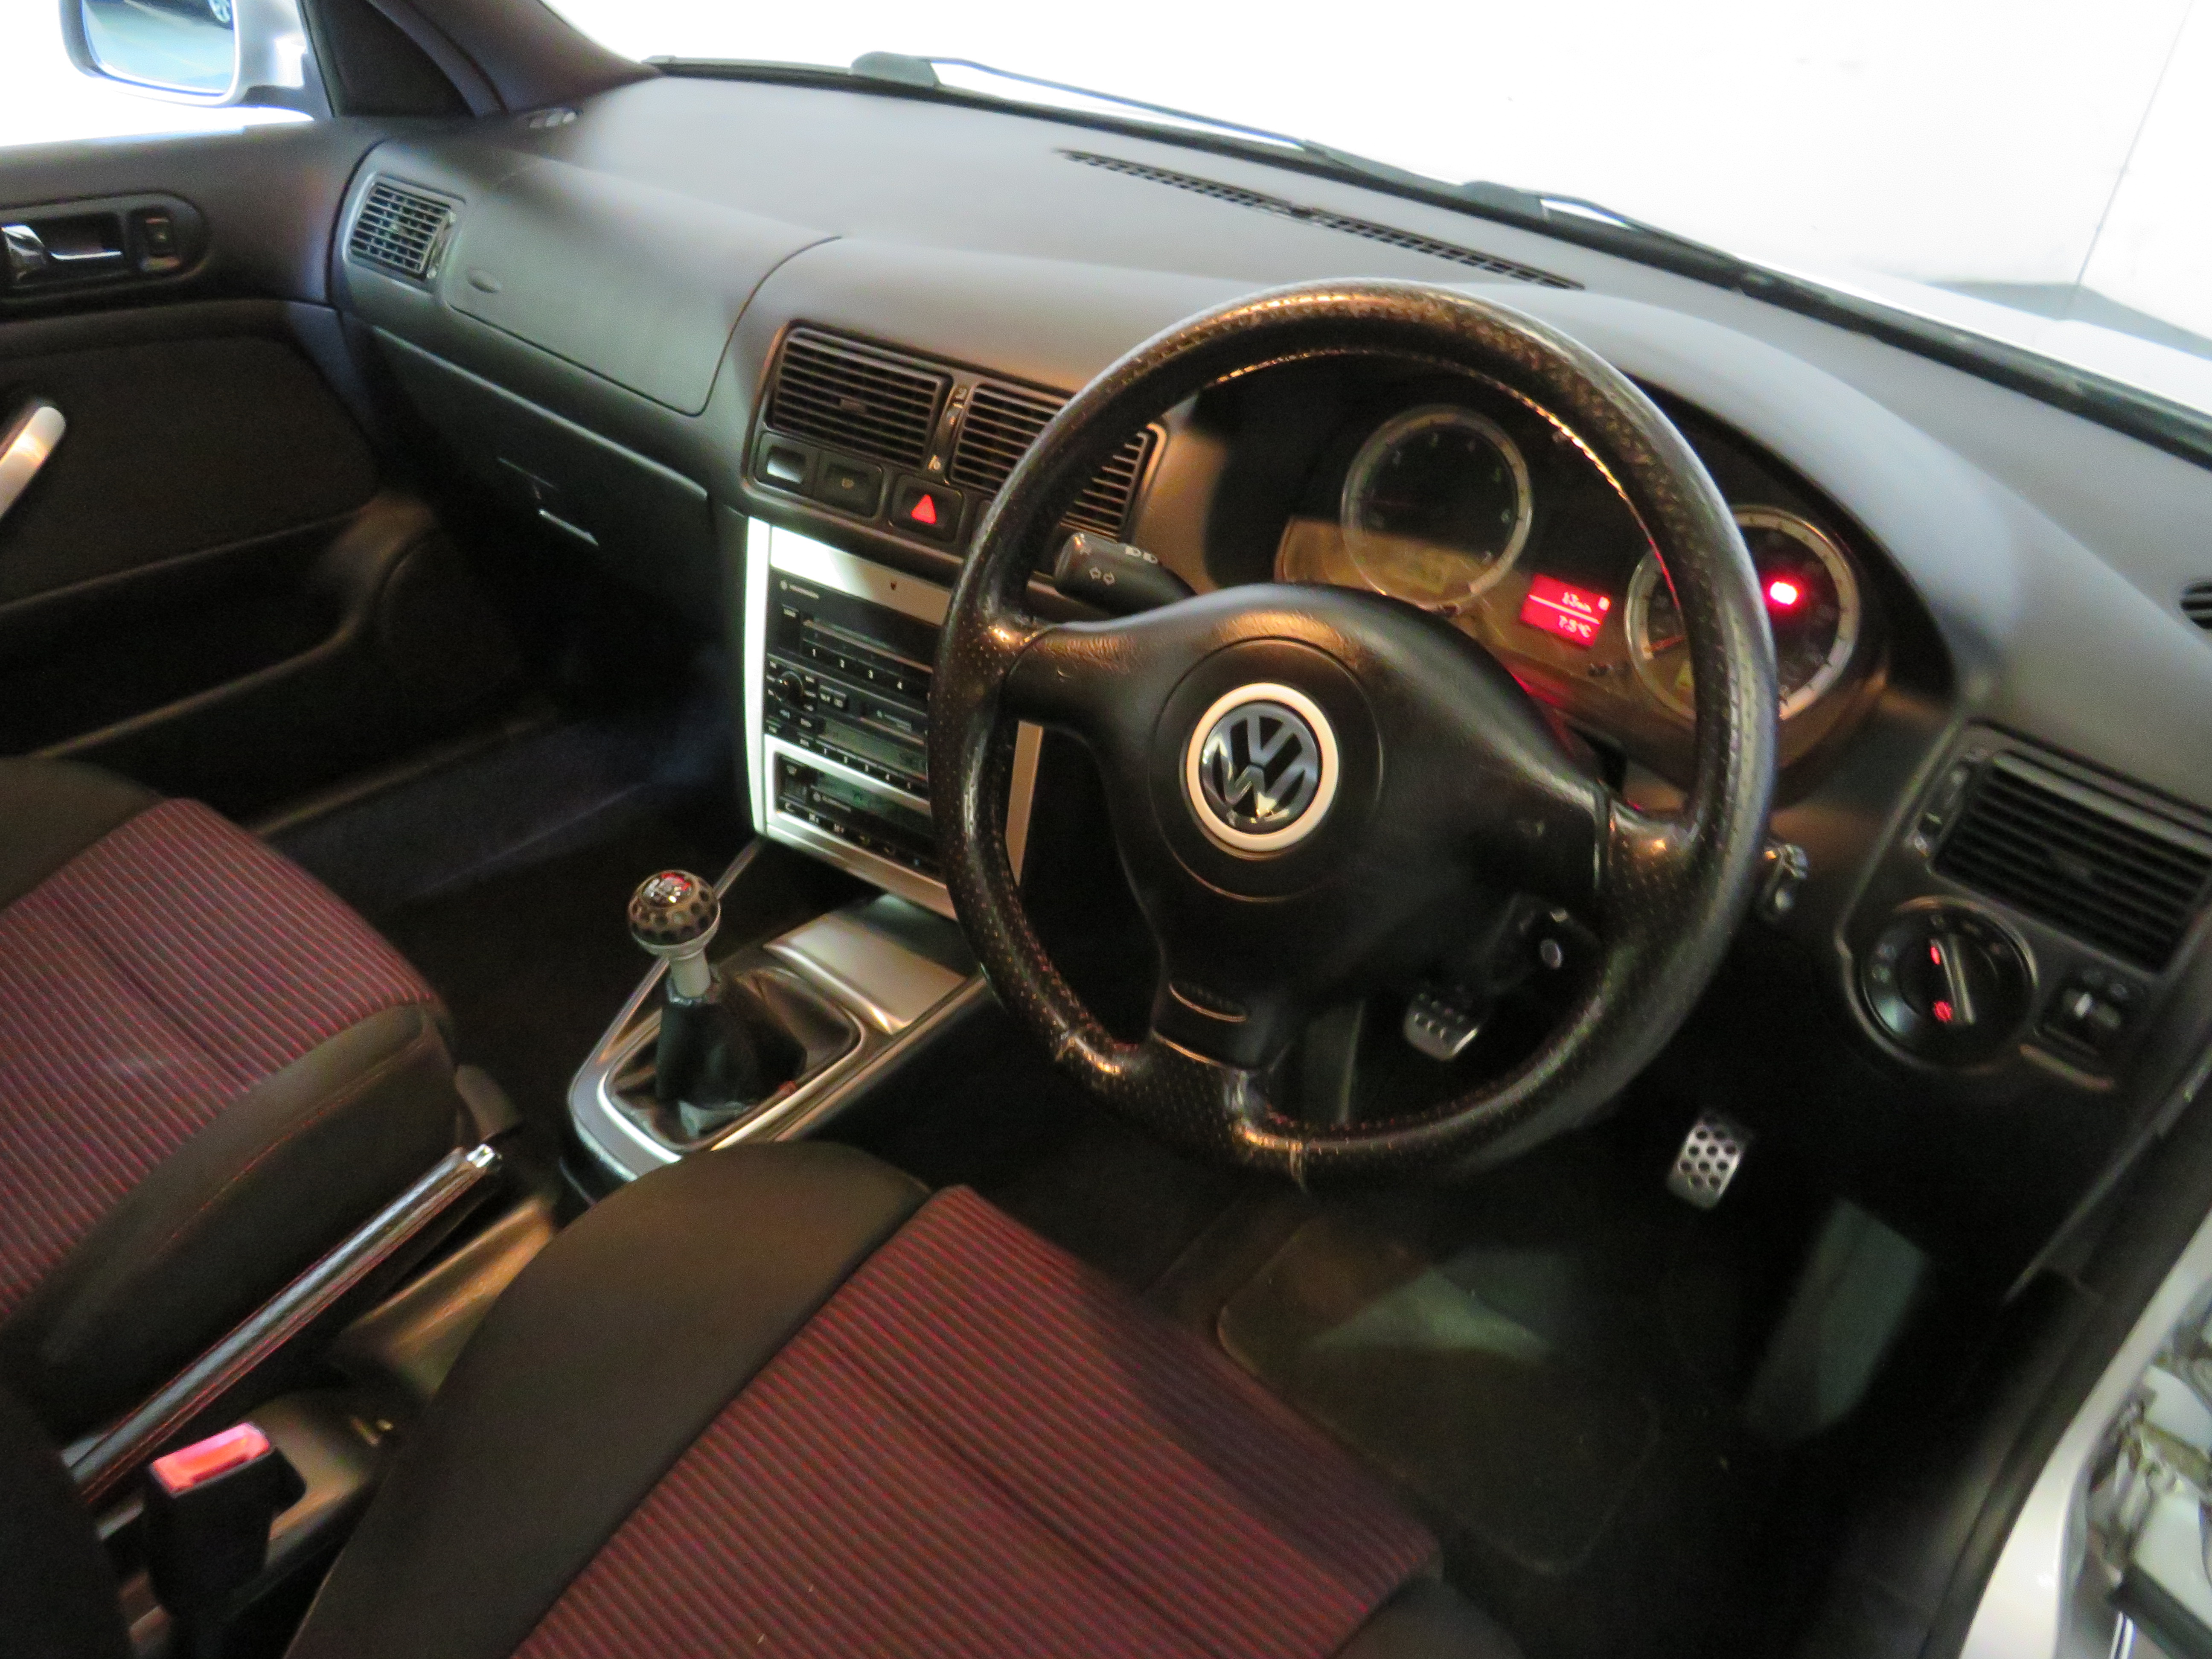 2002 Volkswagen Golf GTI 25th Anniversary - 1781cc - Image 9 of 19